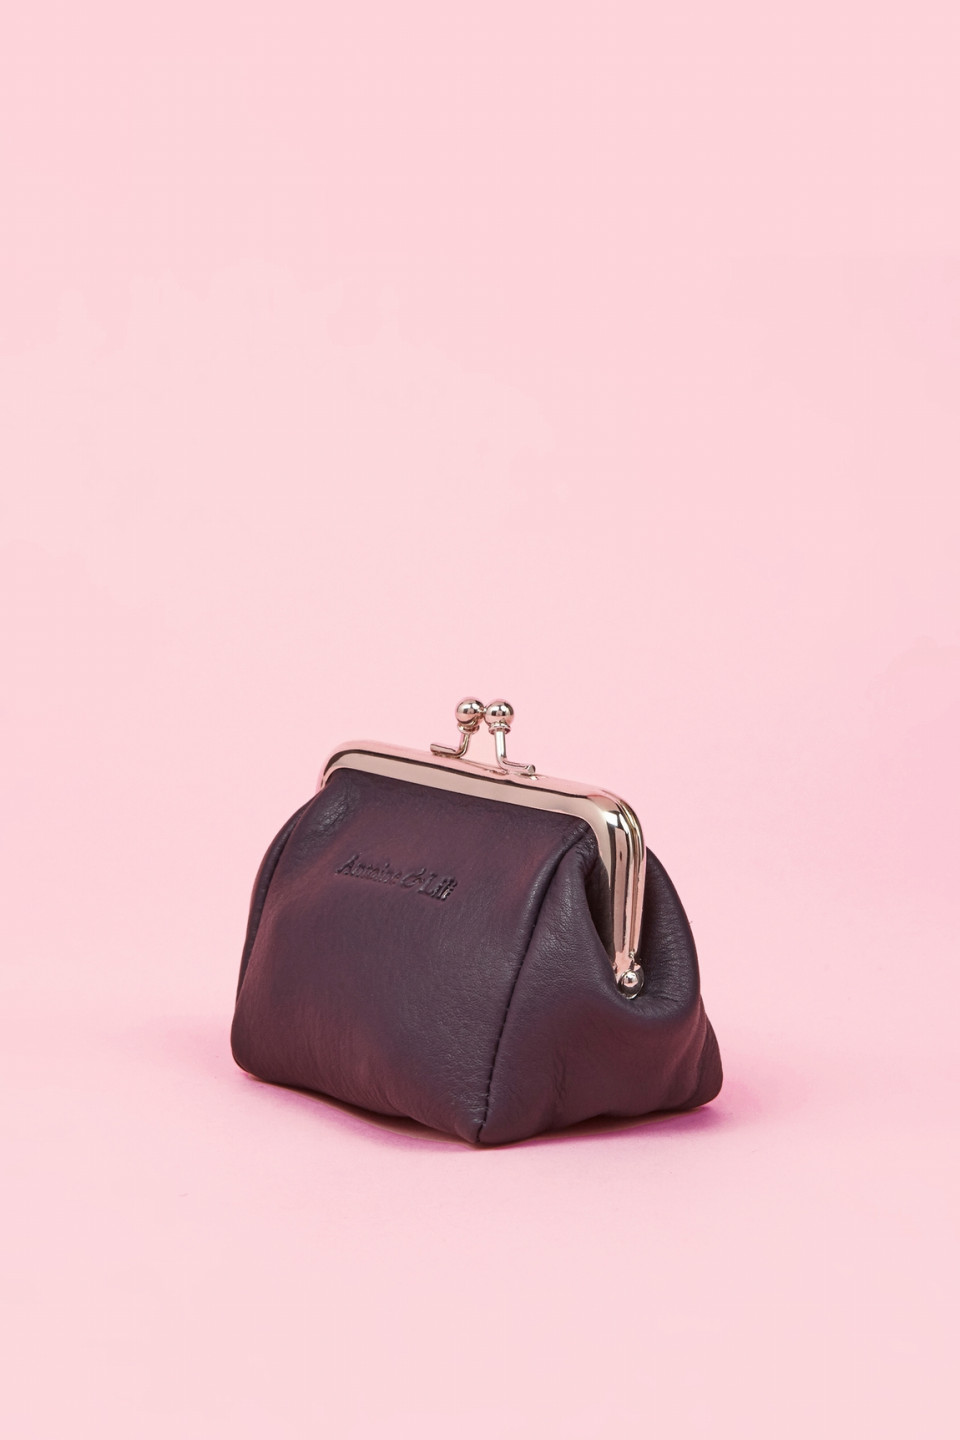 Zipper Coin Purse Large Capacity Card Bag Fashion HandBags Women | eBay